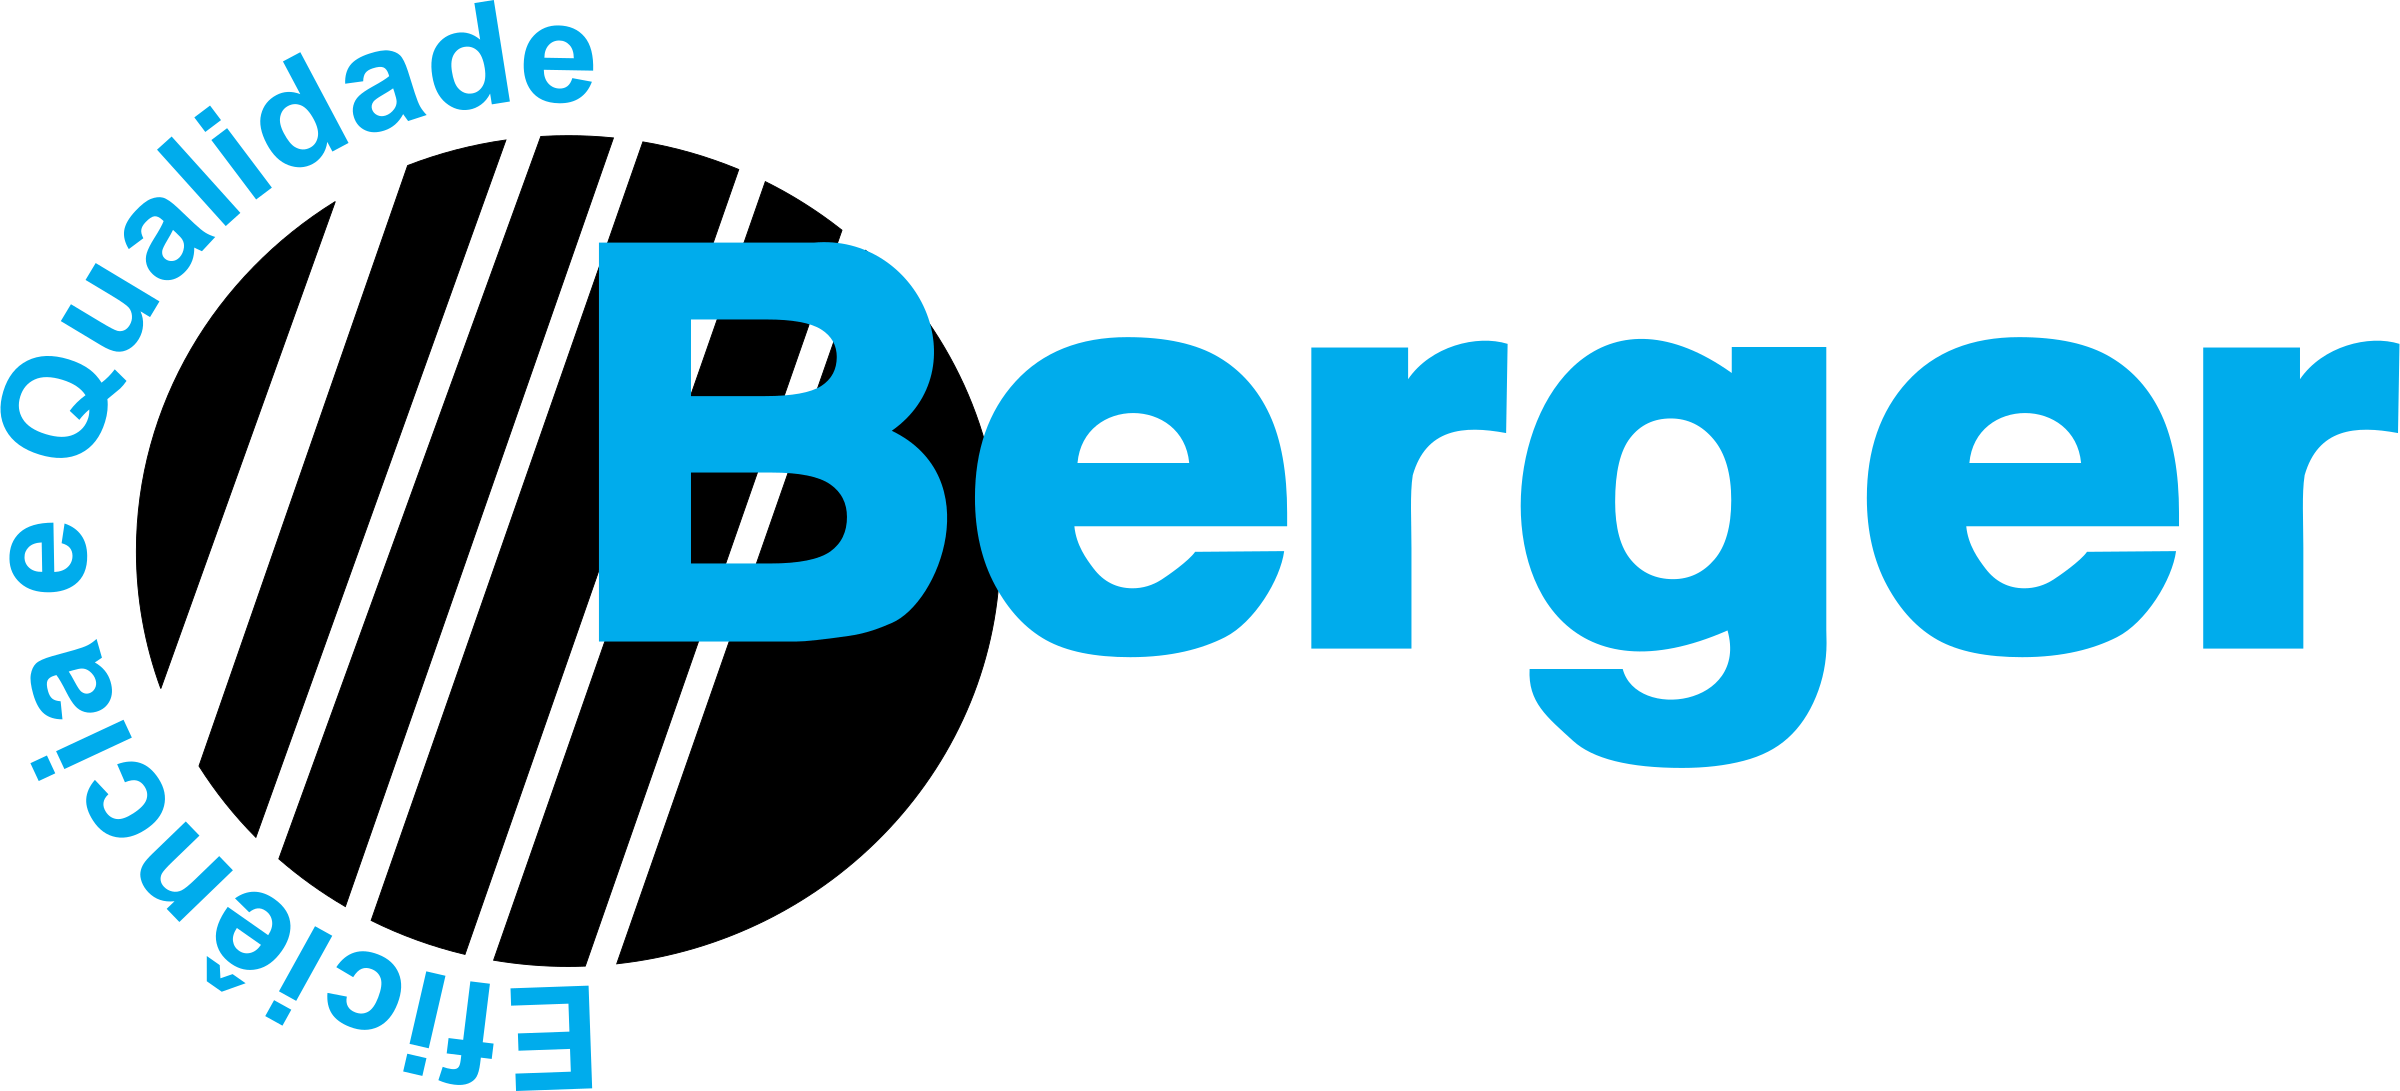 Berger Logo - Berger Logo PNG Transparent & SVG Vector - Freebie Supply